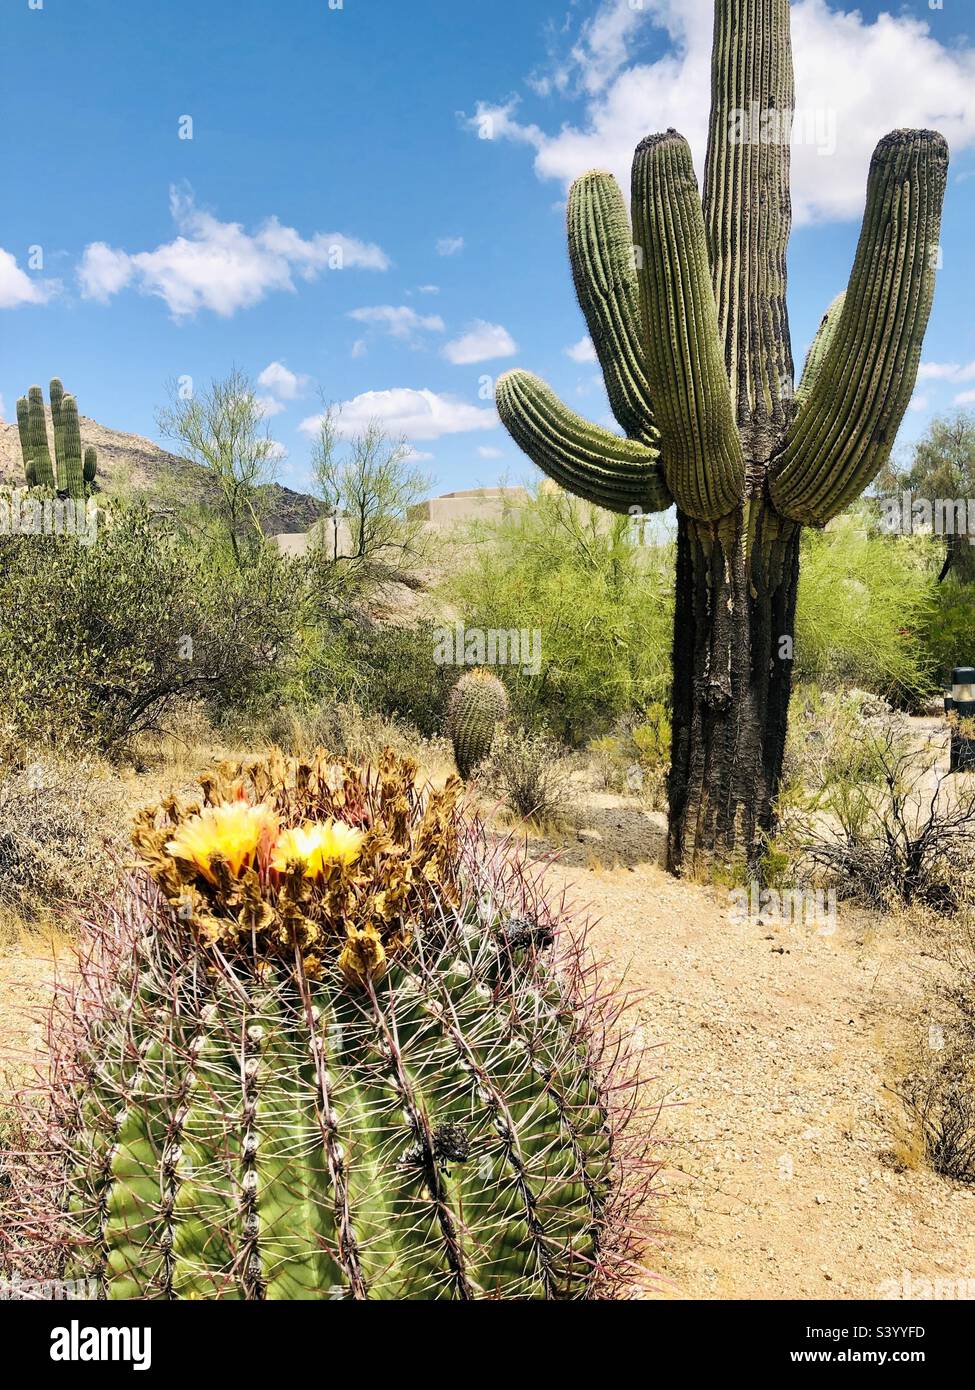 Cactus desert scenery in Phoenix Arizona with a large saguaro cactus Stock Photo